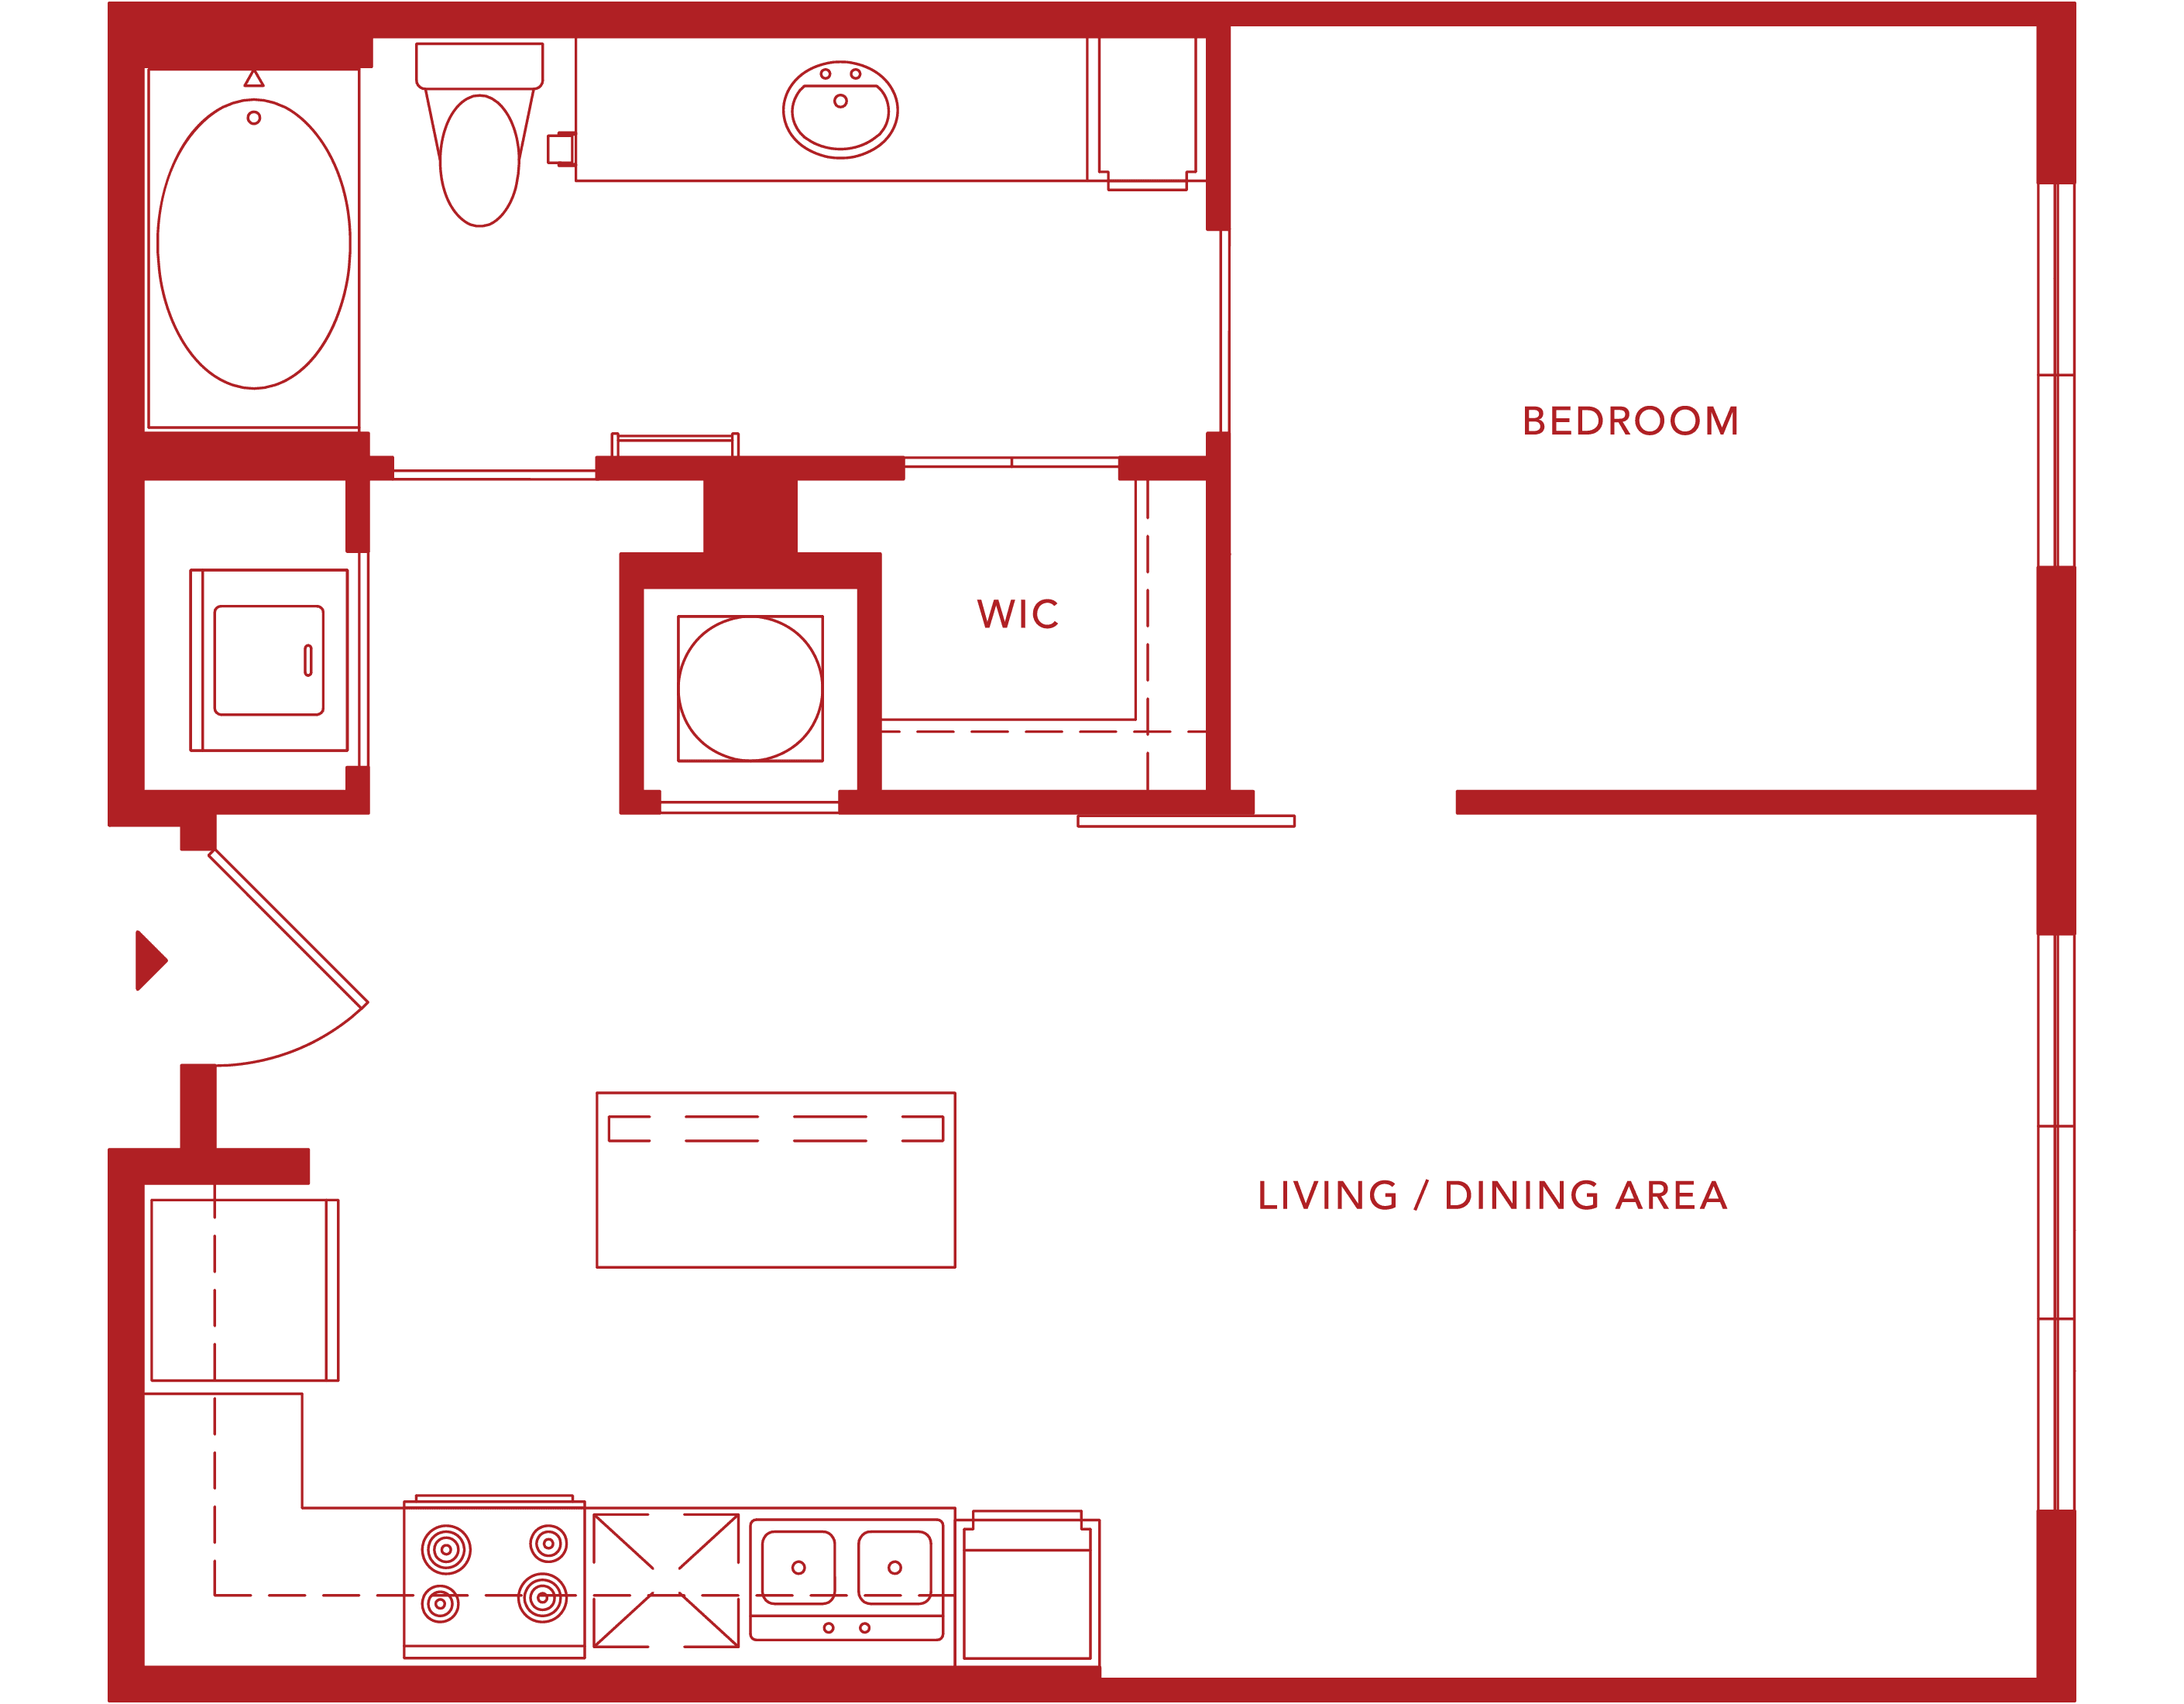 The Paramount - Classic 1 1 bedroom, 1 bathroom open concept layout floorplan